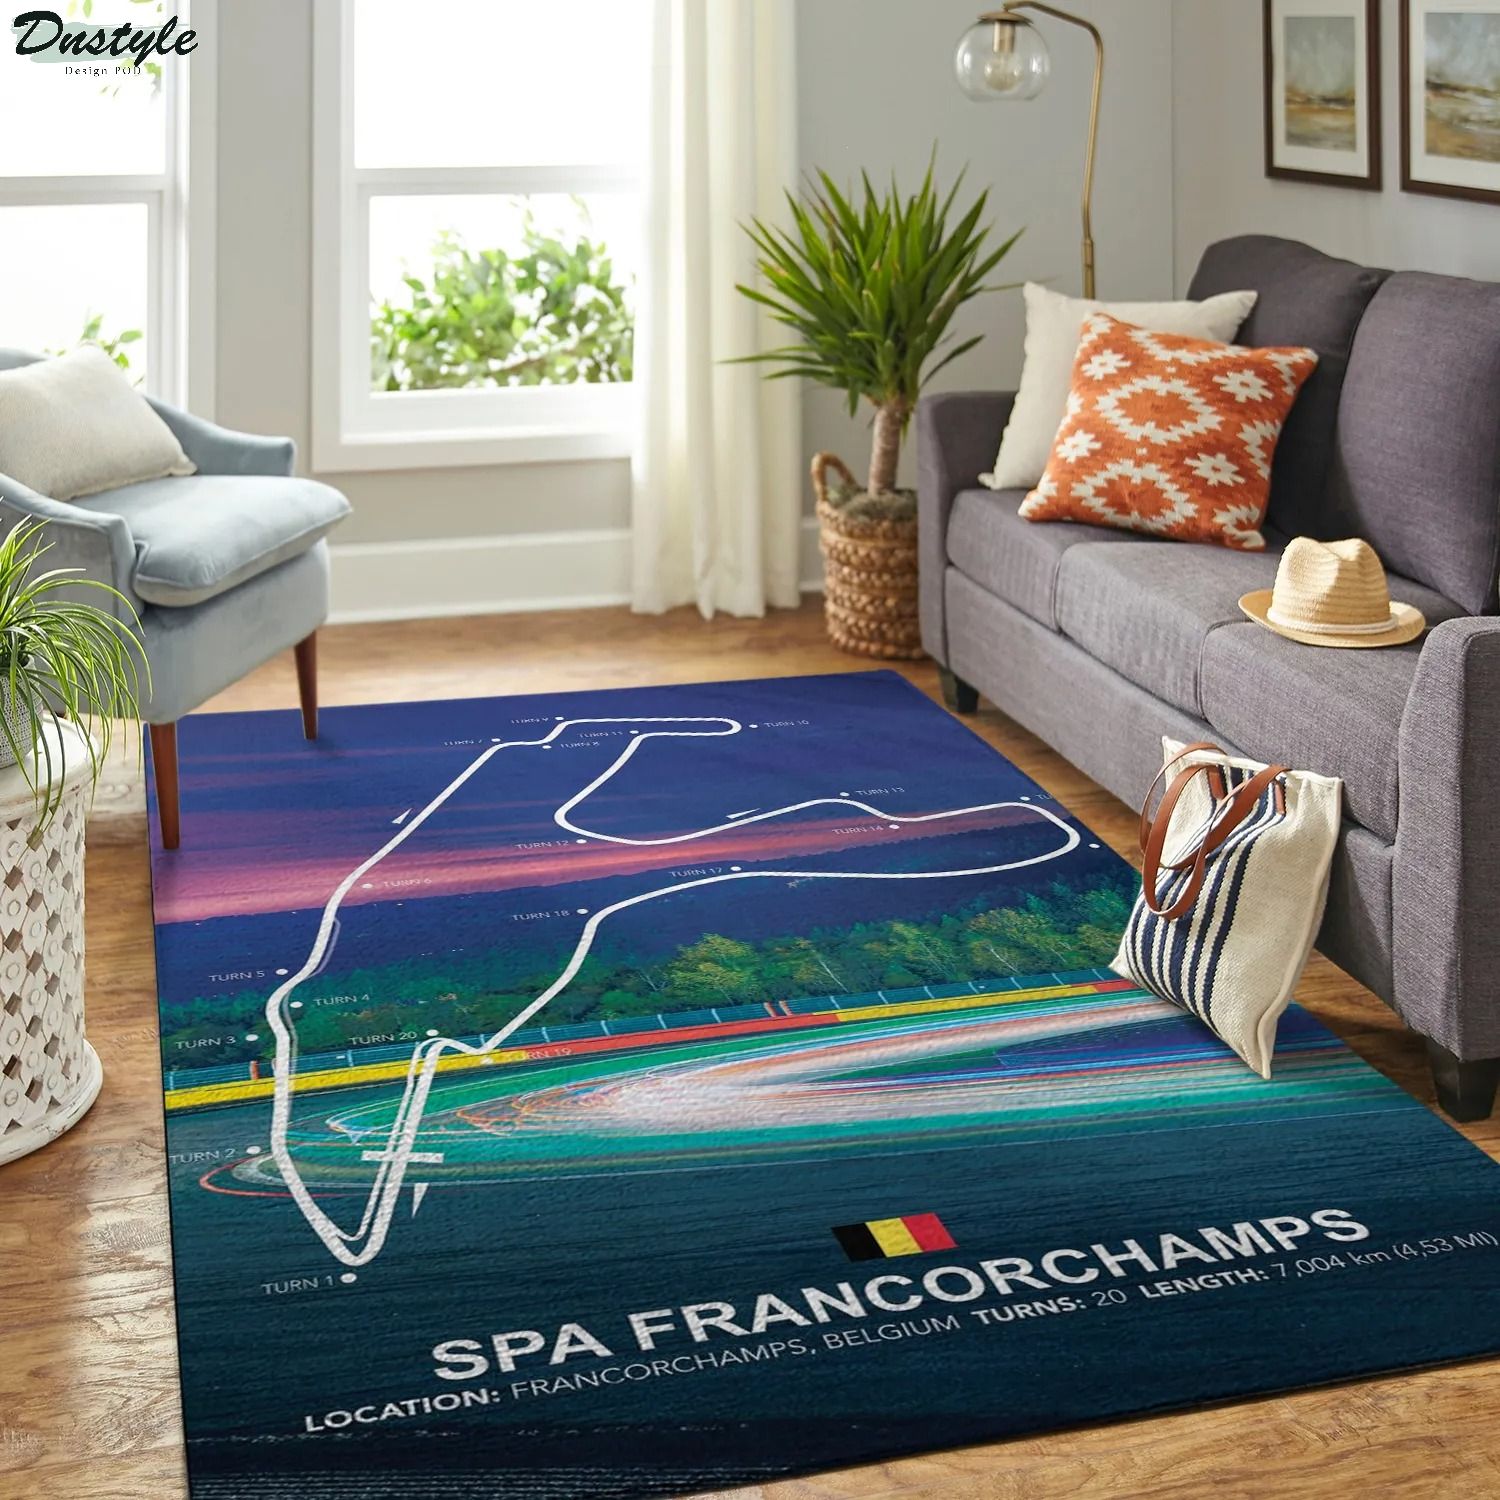 Spa francorchamps f1 track rug